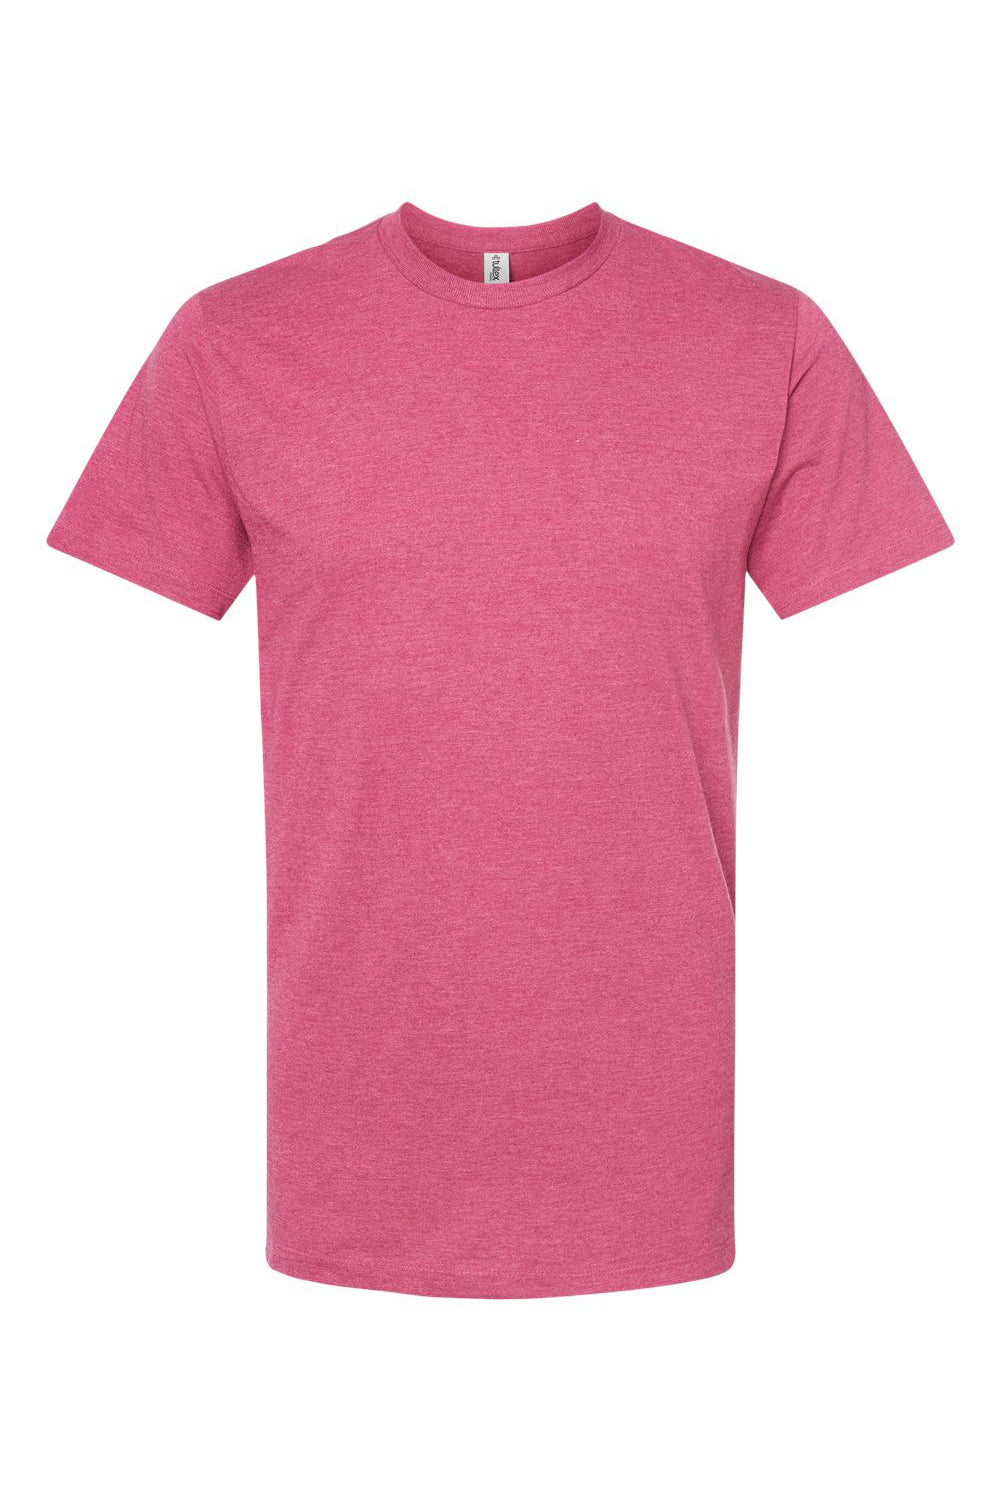 Tultex 541 Mens Premium Short Sleeve Crewneck T-Shirt Heather Cactus Flower Pink Flat Front